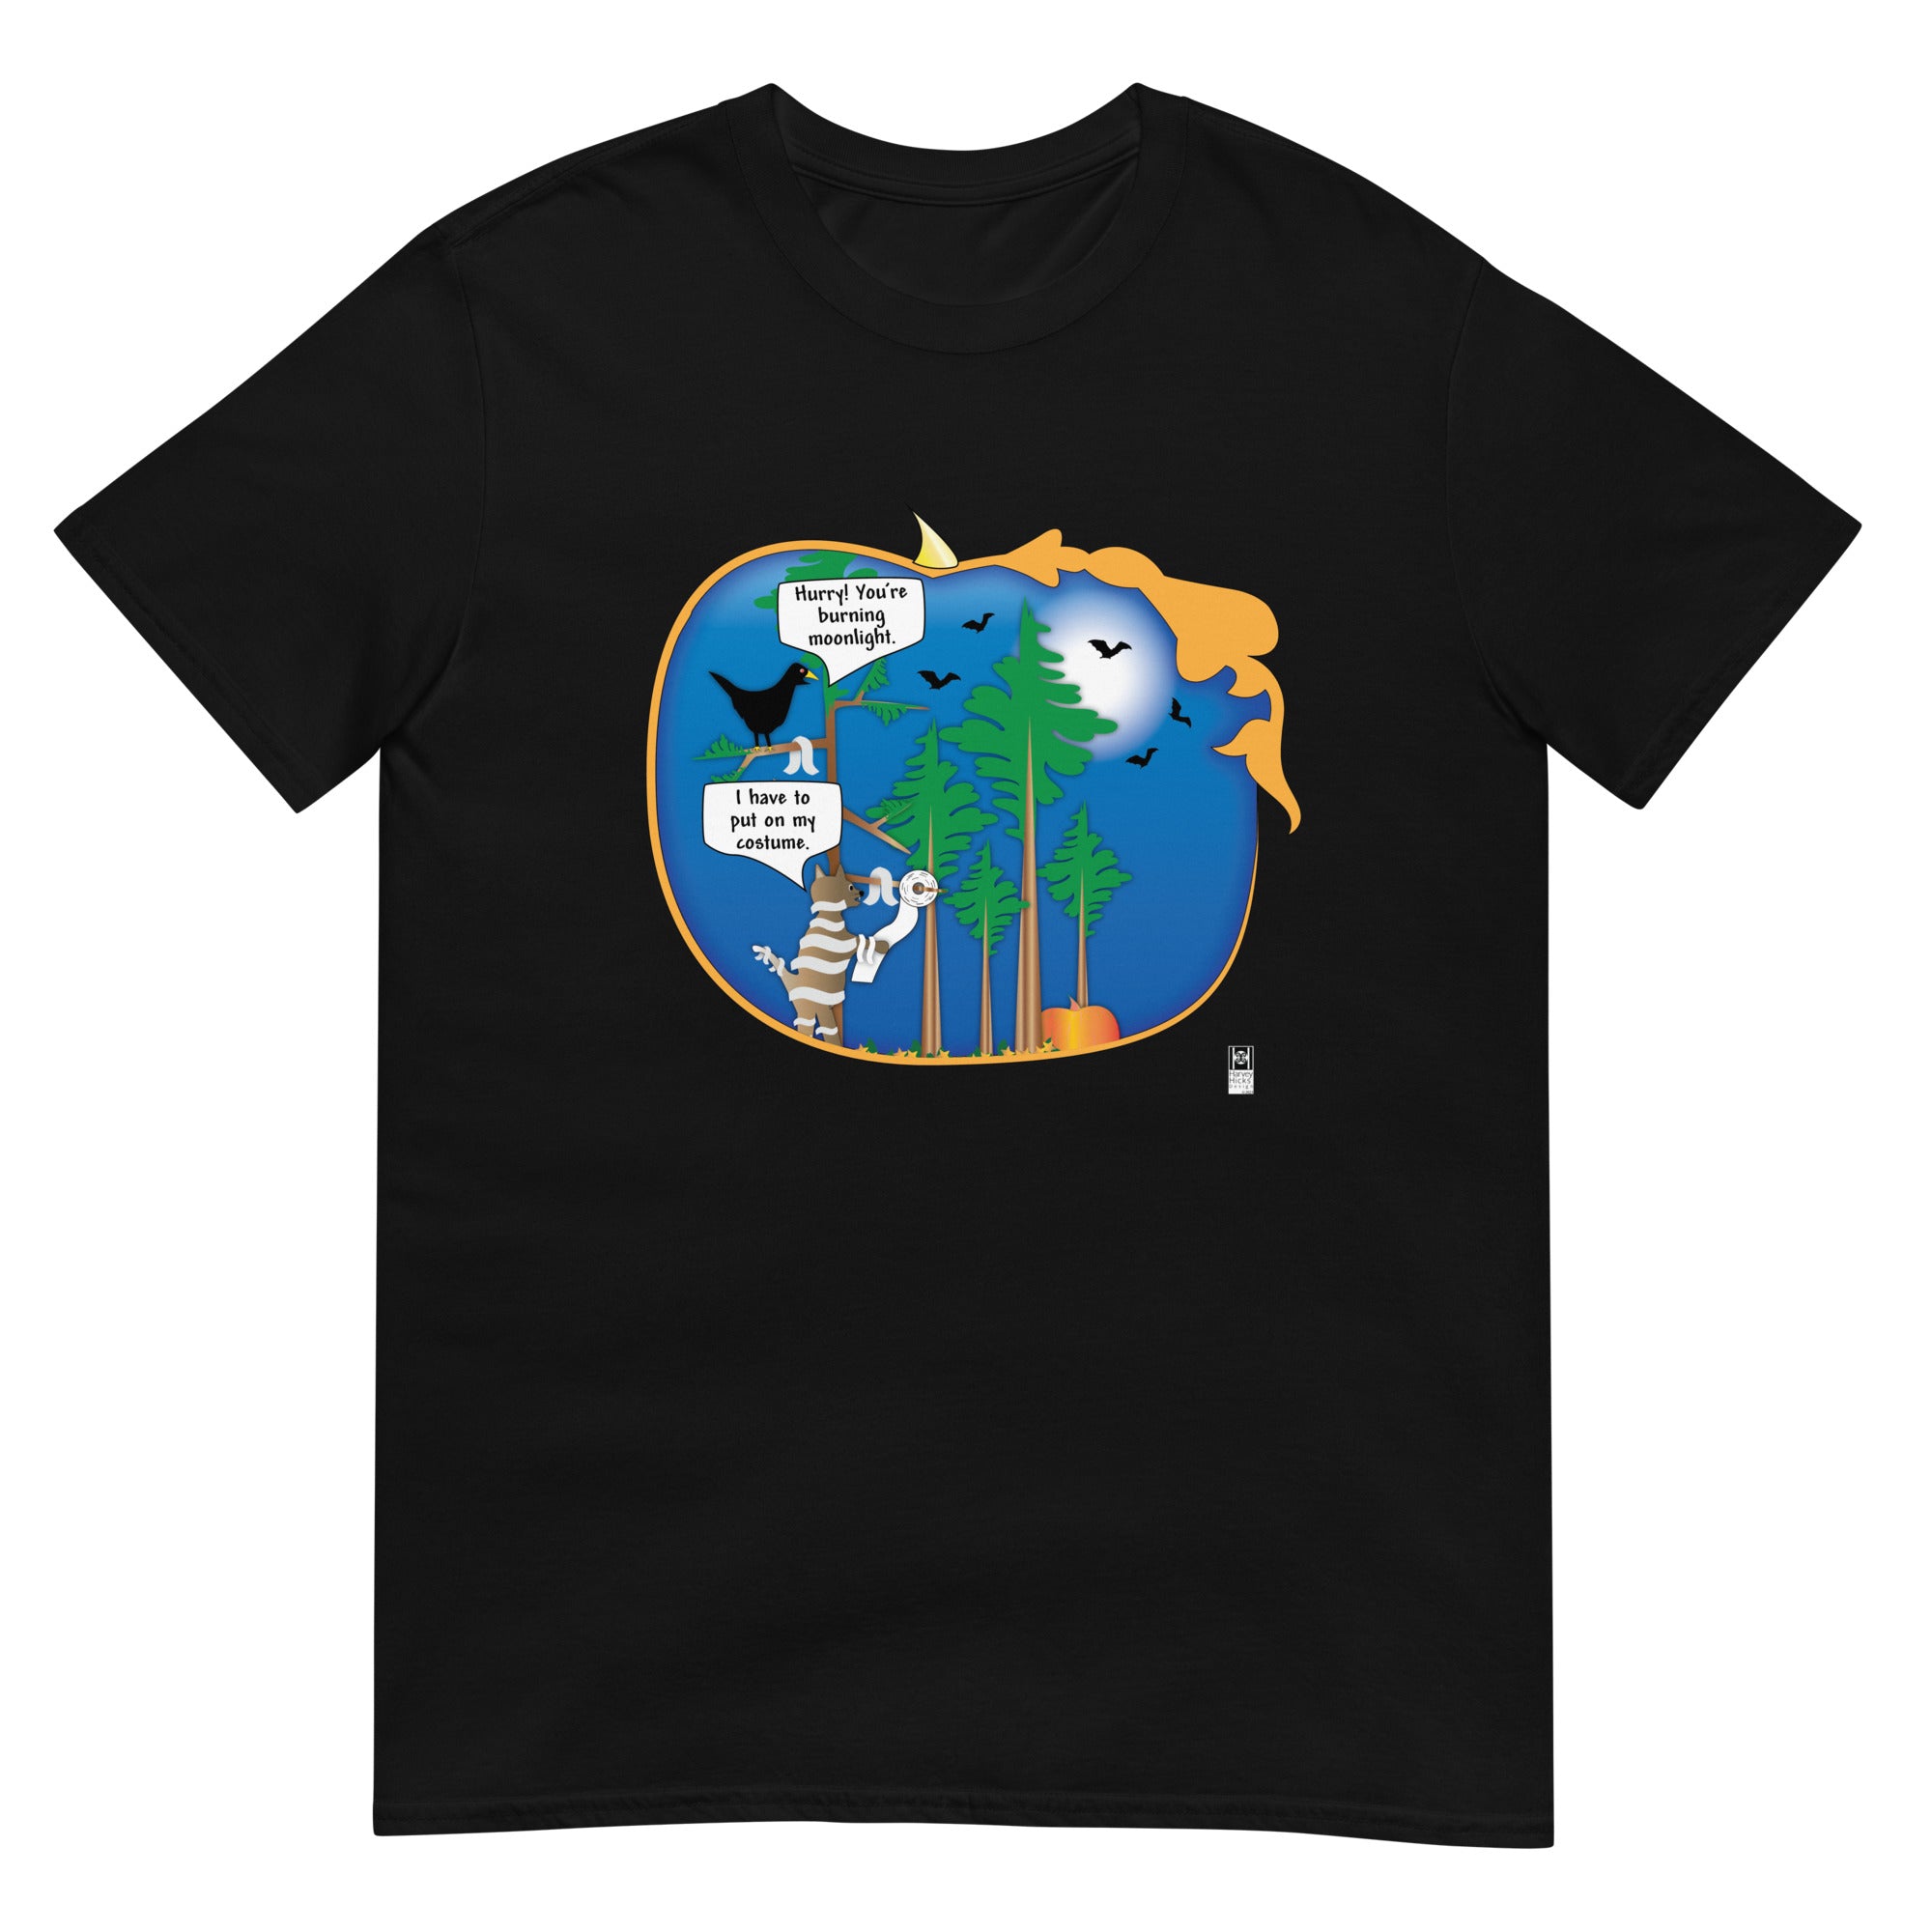 Short-Sleeve Unisex T-Shirt, Halloween cat illustration, black or navy